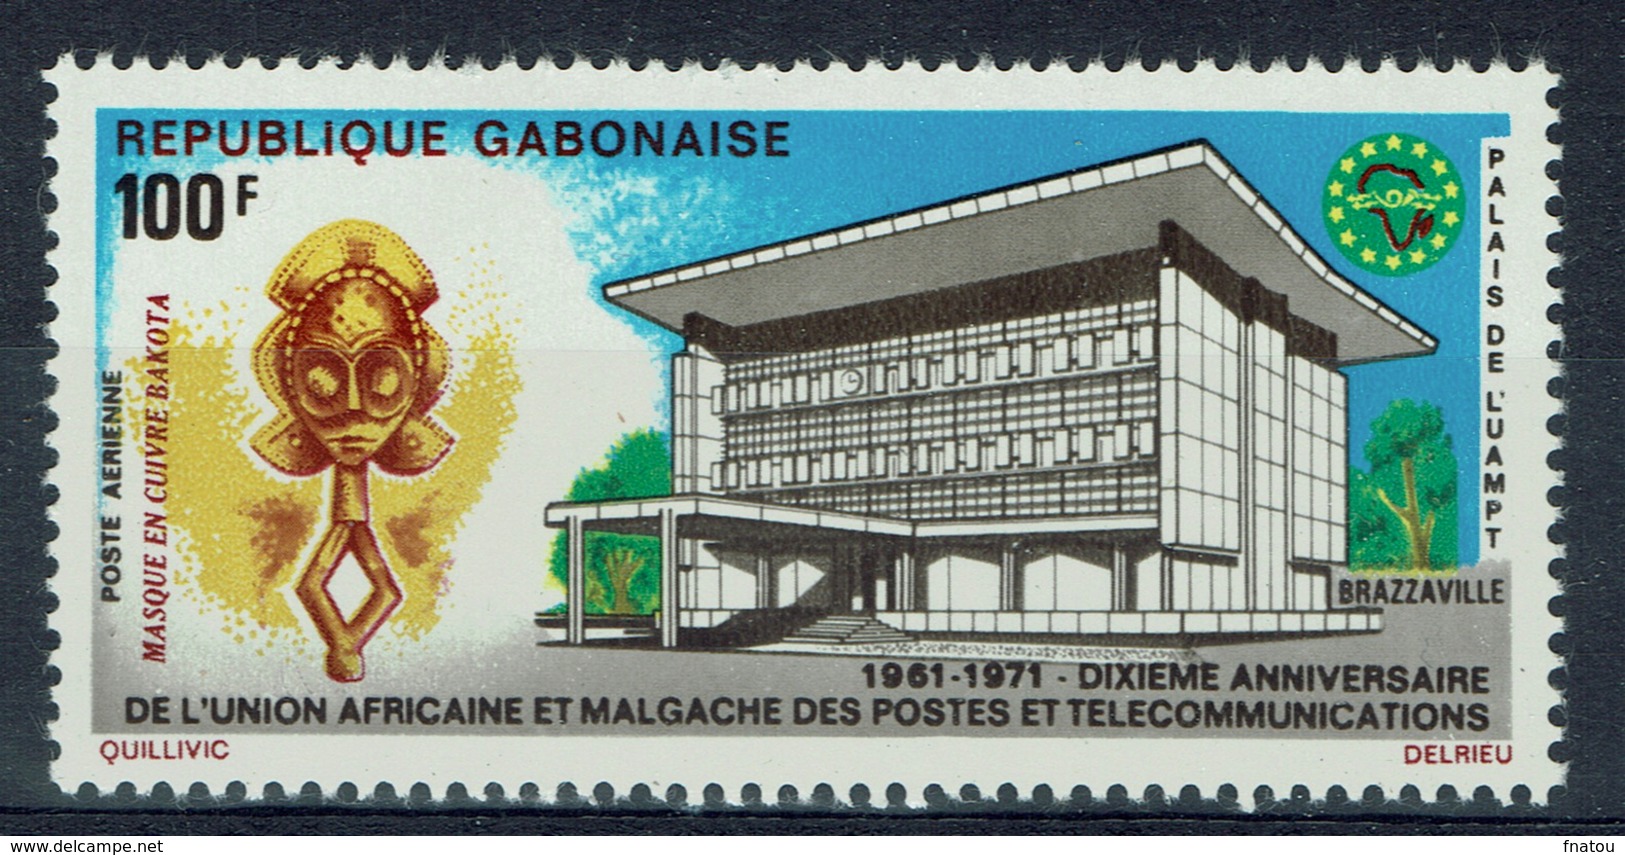 Gabon, UAMPT, 1971, MNH VF  airmail - Gabon